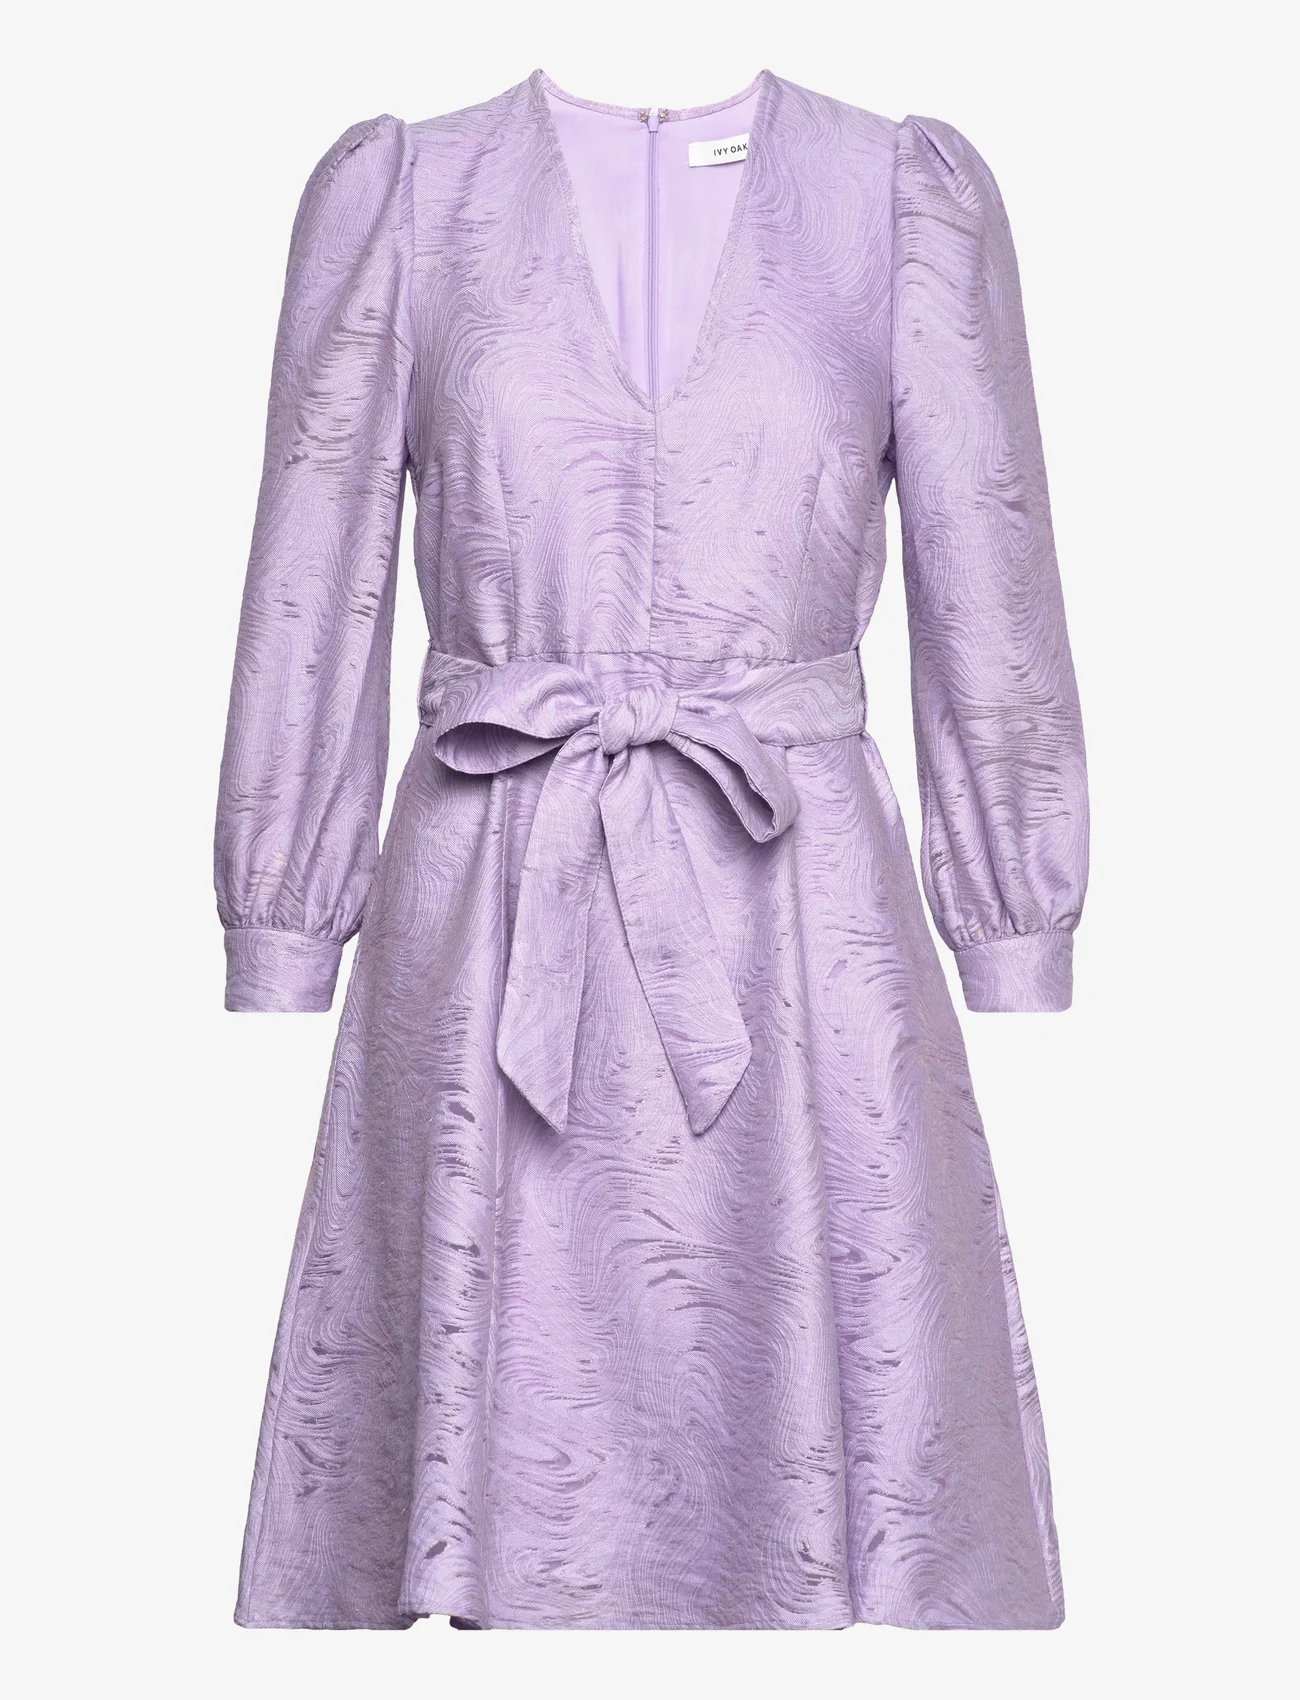 IVY OAK - Mini Length Dress - party wear at outlet prices - light lavender - 0